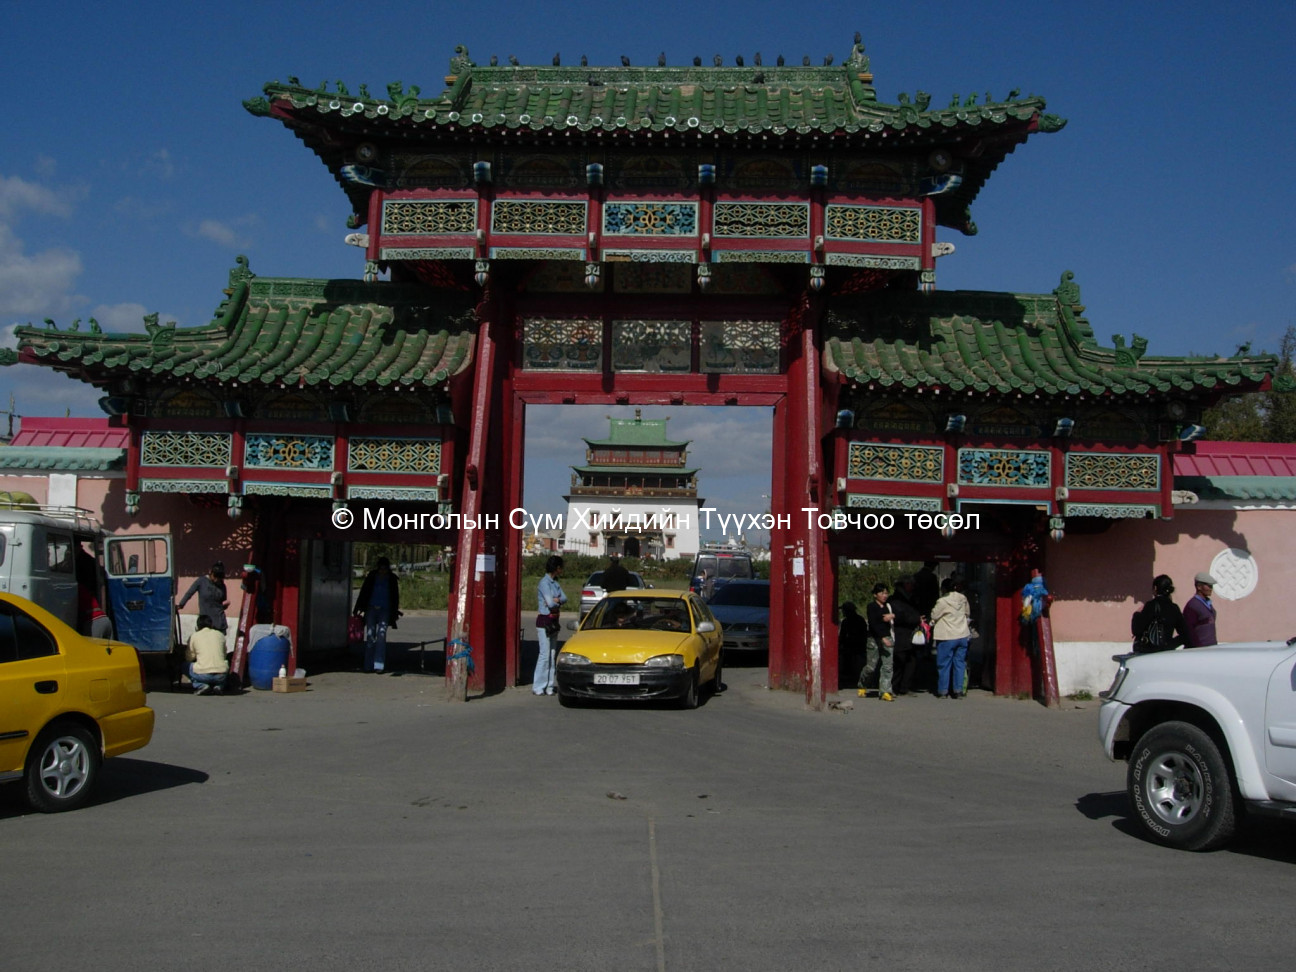 The main entrance of Gandan Monastery and Janraise